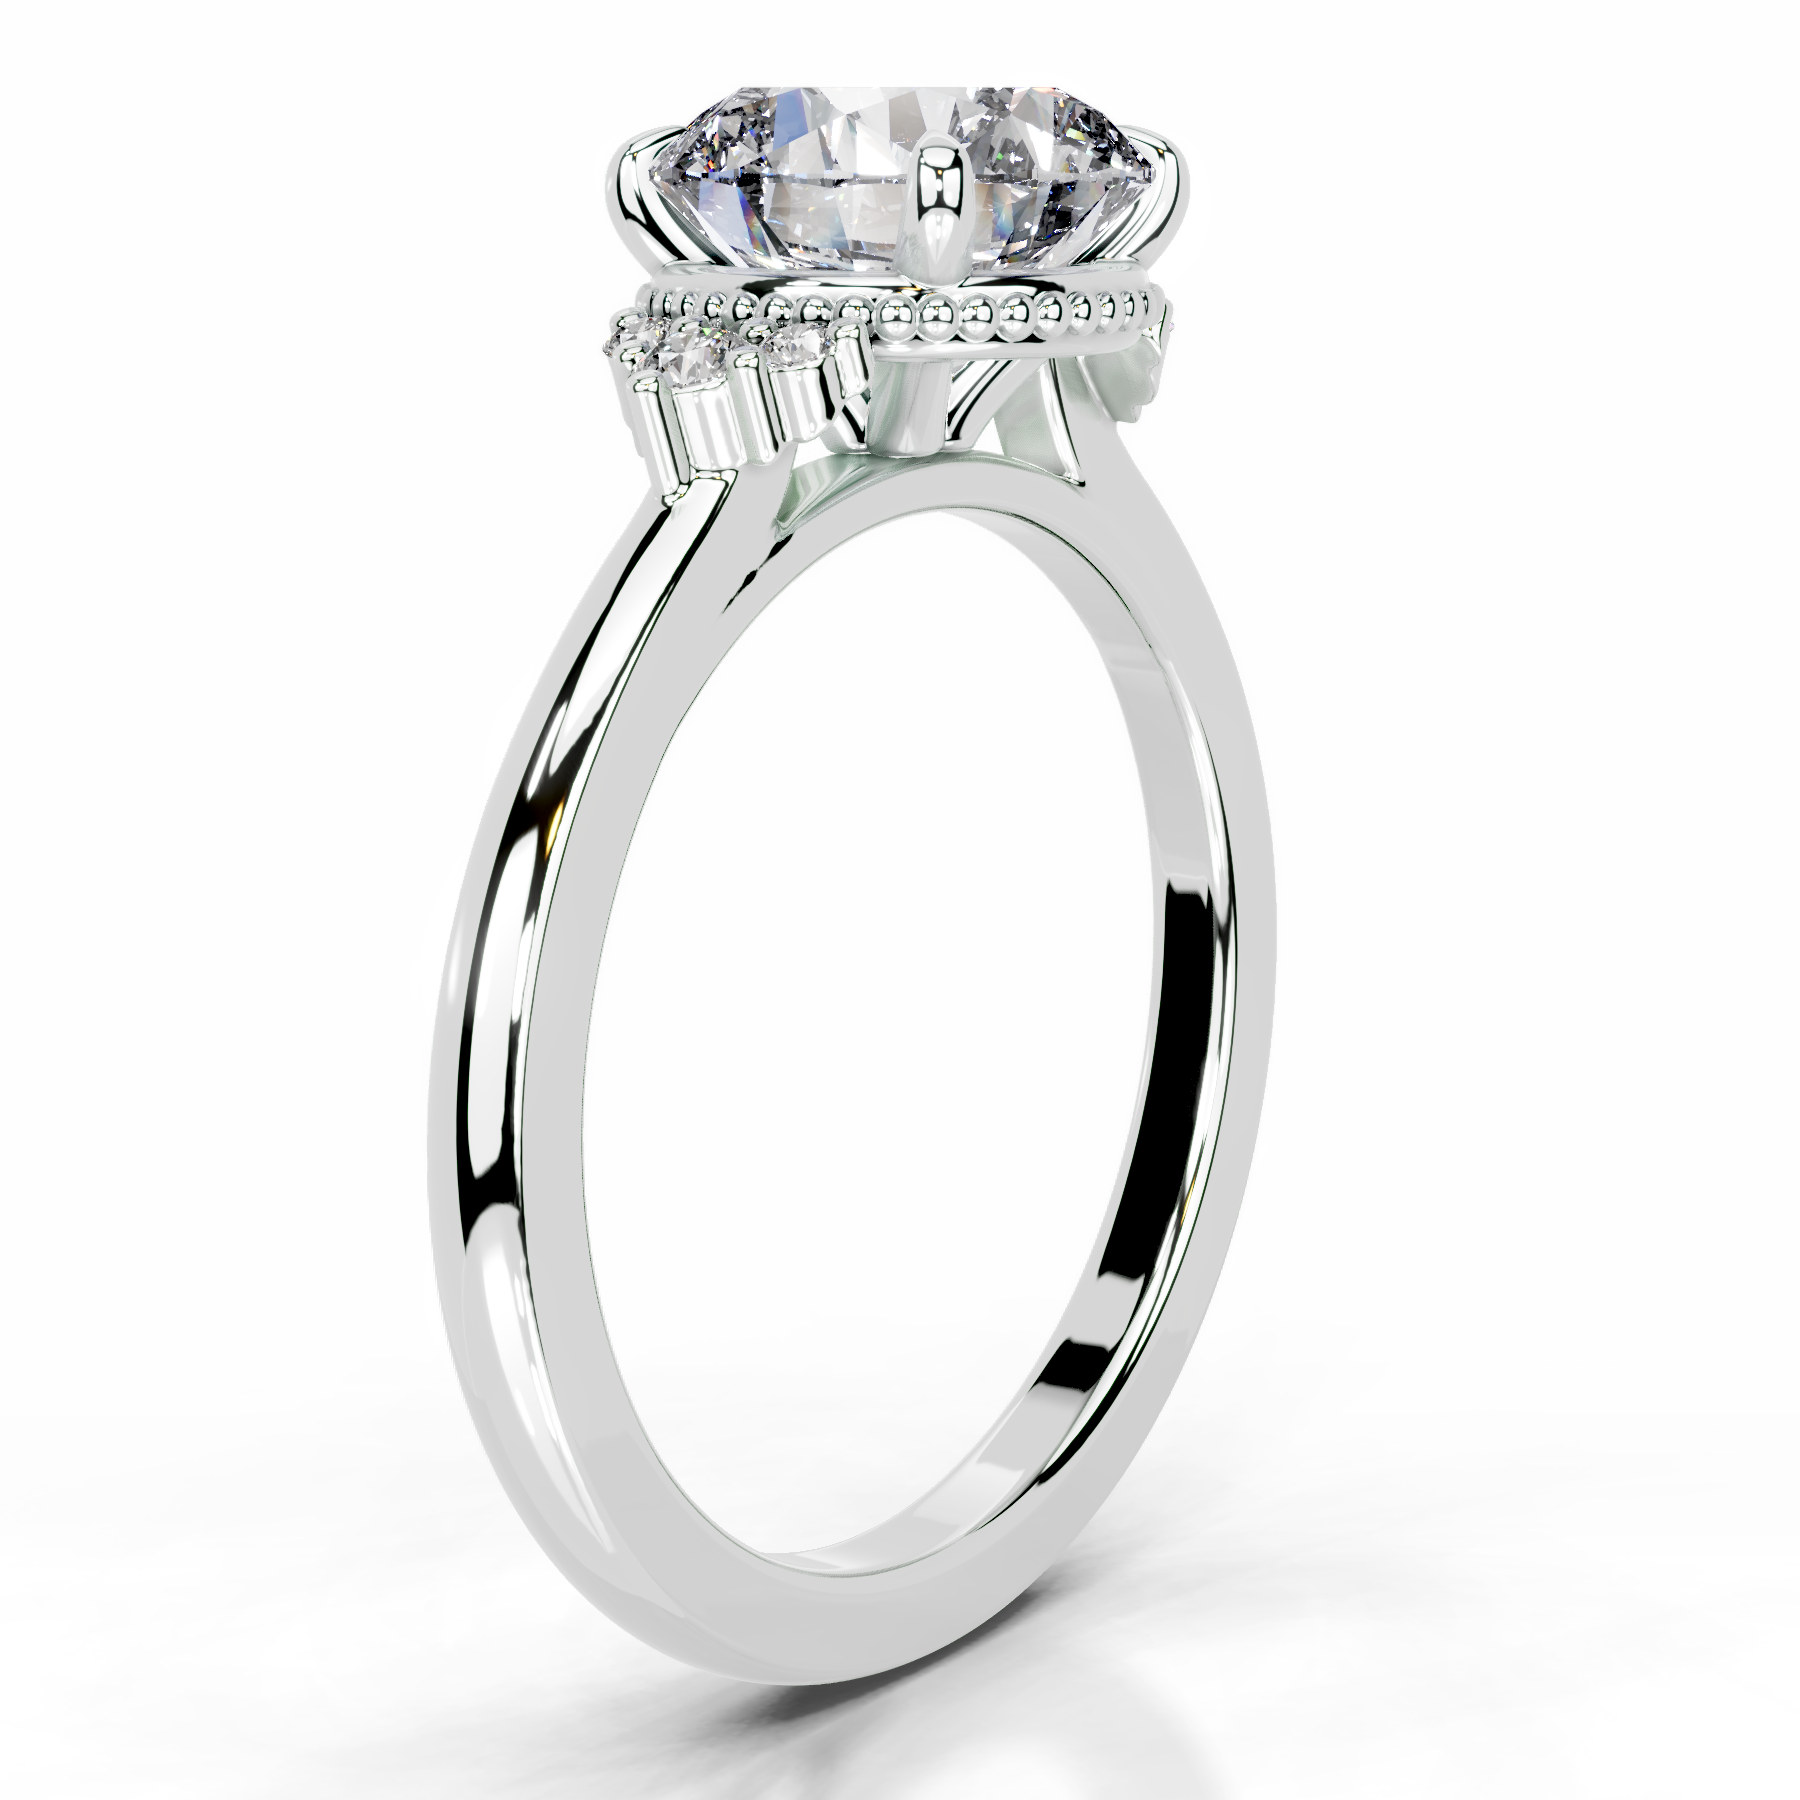 Natasha Diamond Engagement Ring   (2.10 Carat) -18K White Gold